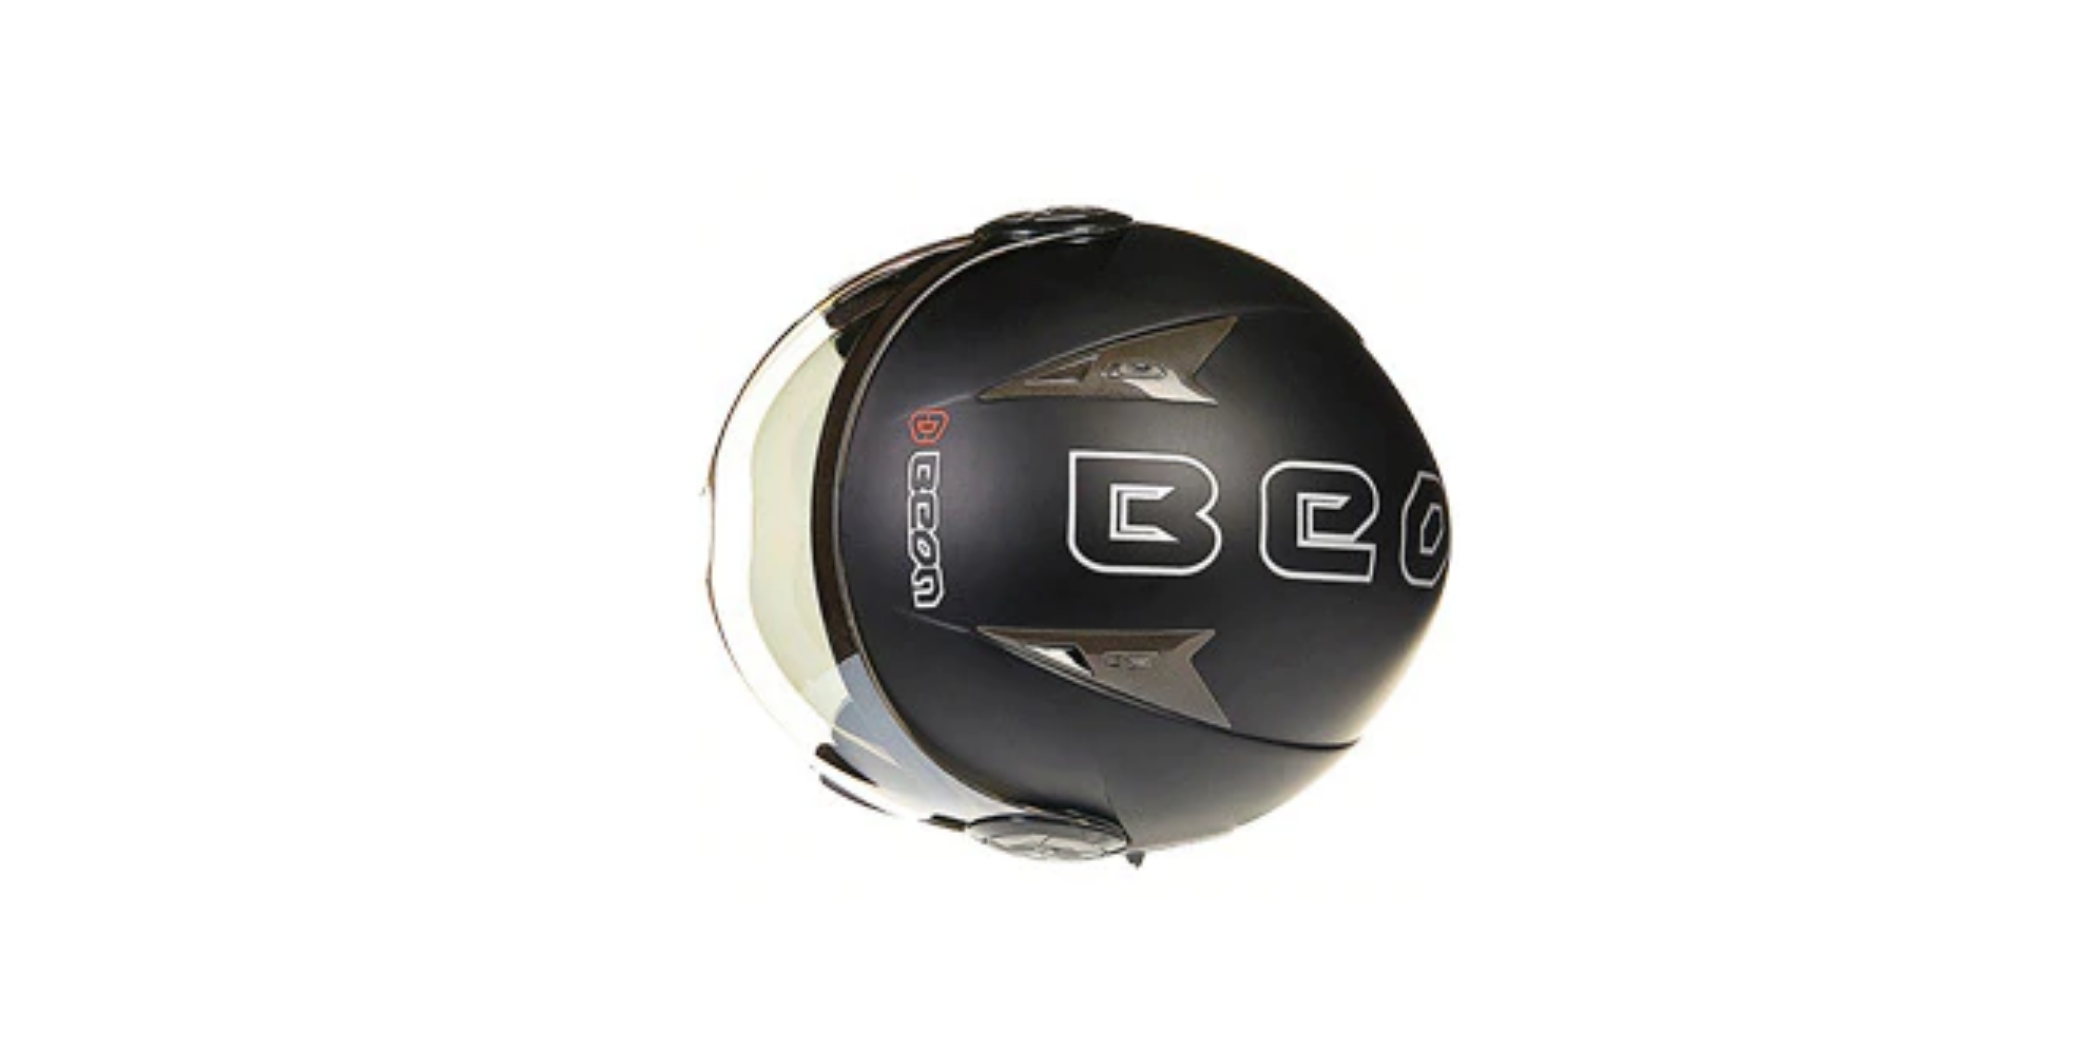 Beon B216 Black Helmet